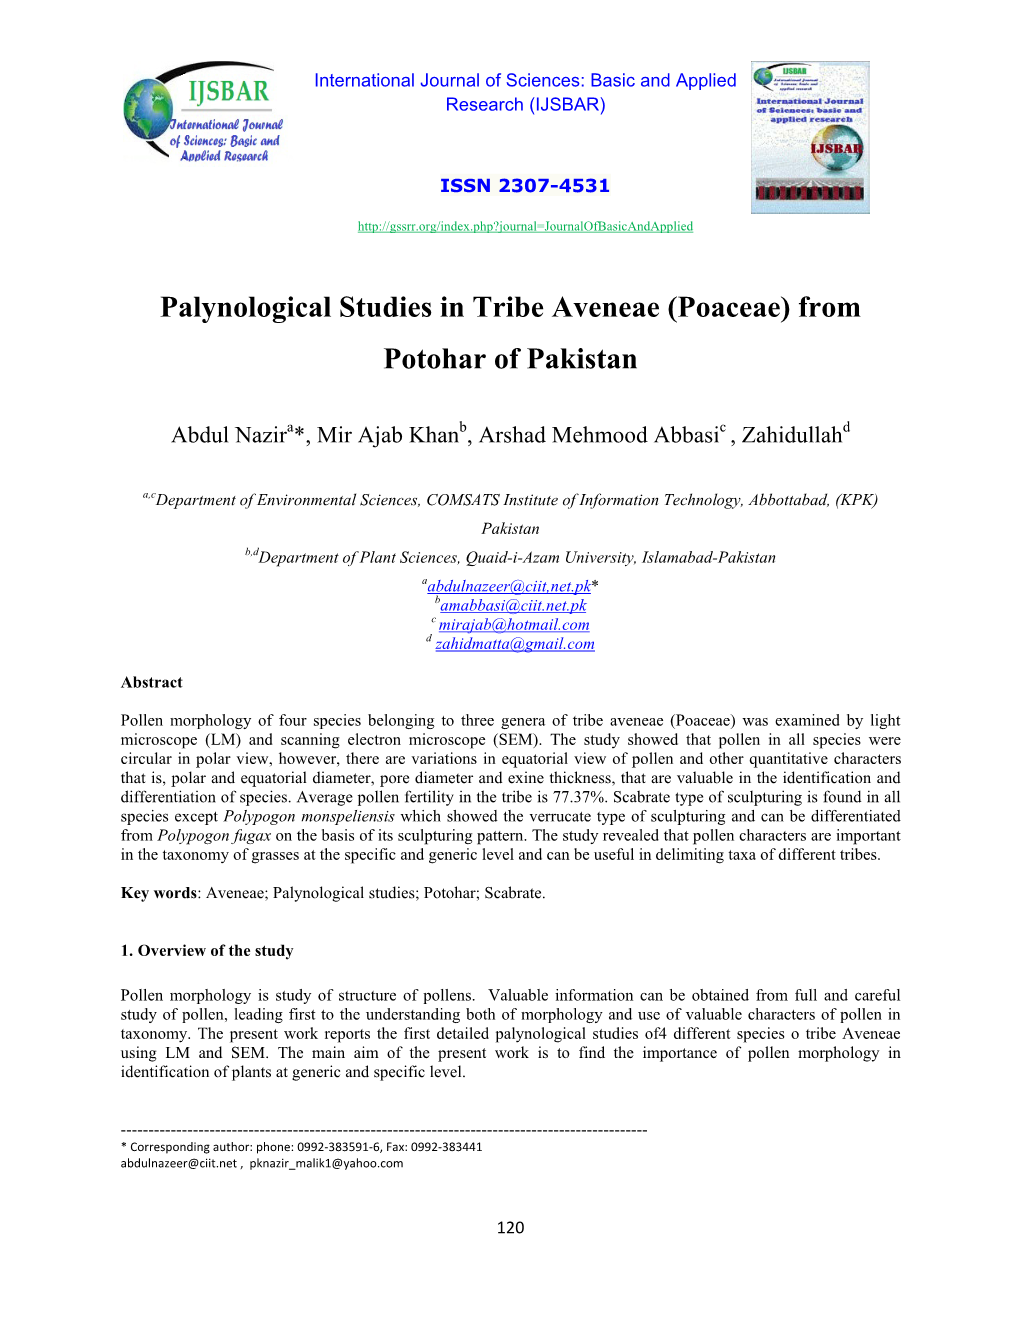 Palynological Studies in Tribe Aveneae (Poaceae) from Potohar of Pakistan